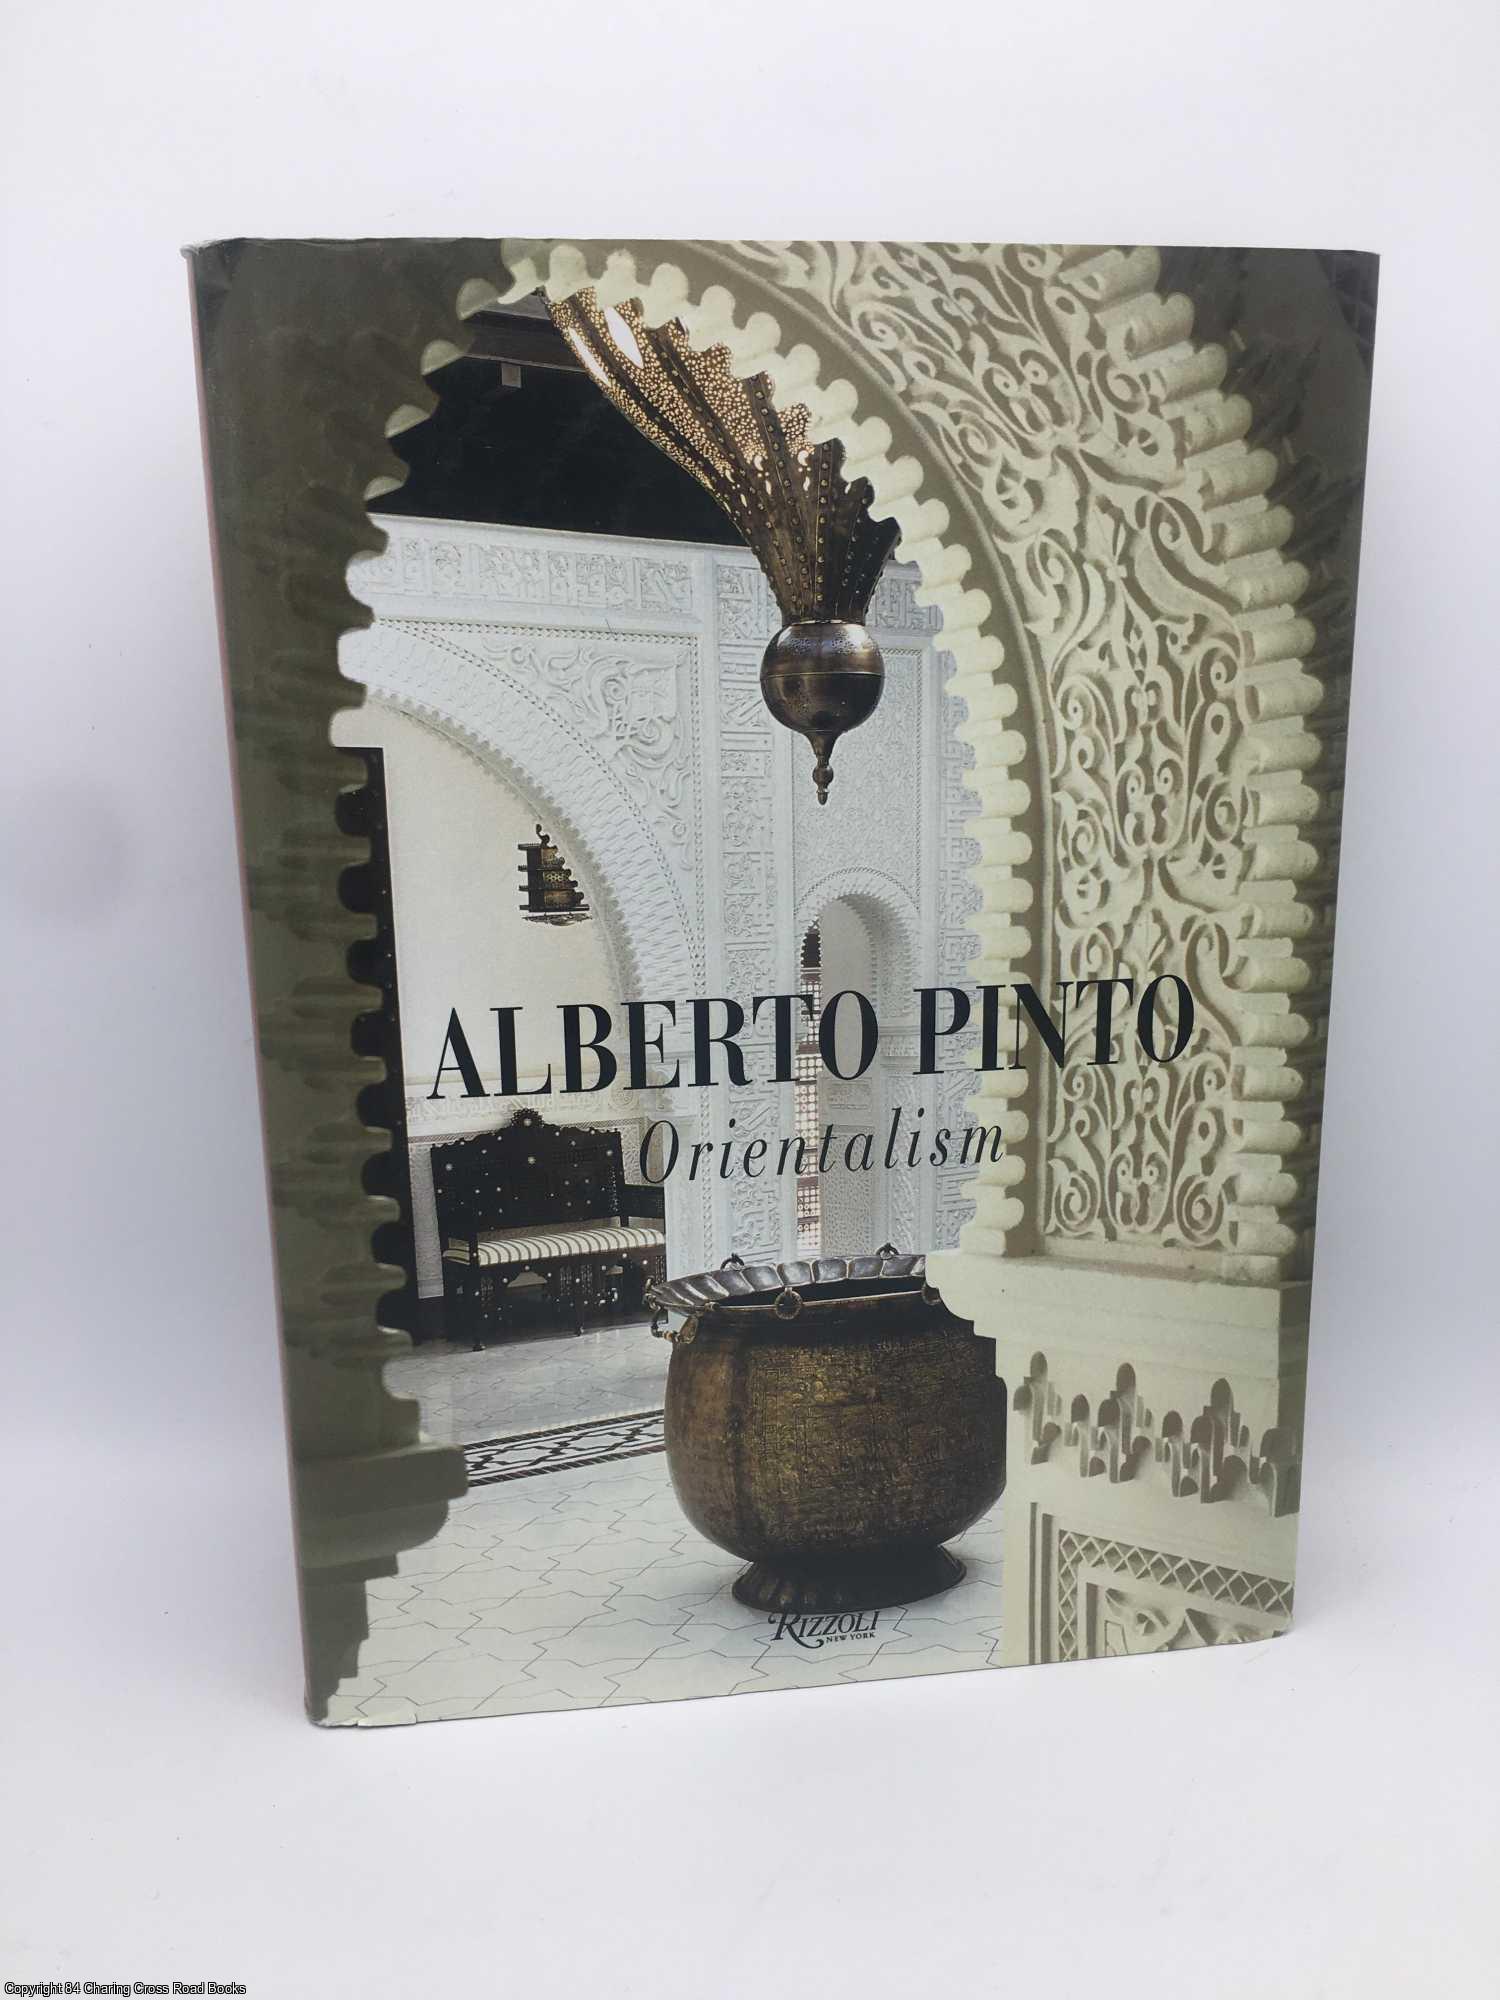 Pinto, Alberto - Alberto Pinto Orientalism